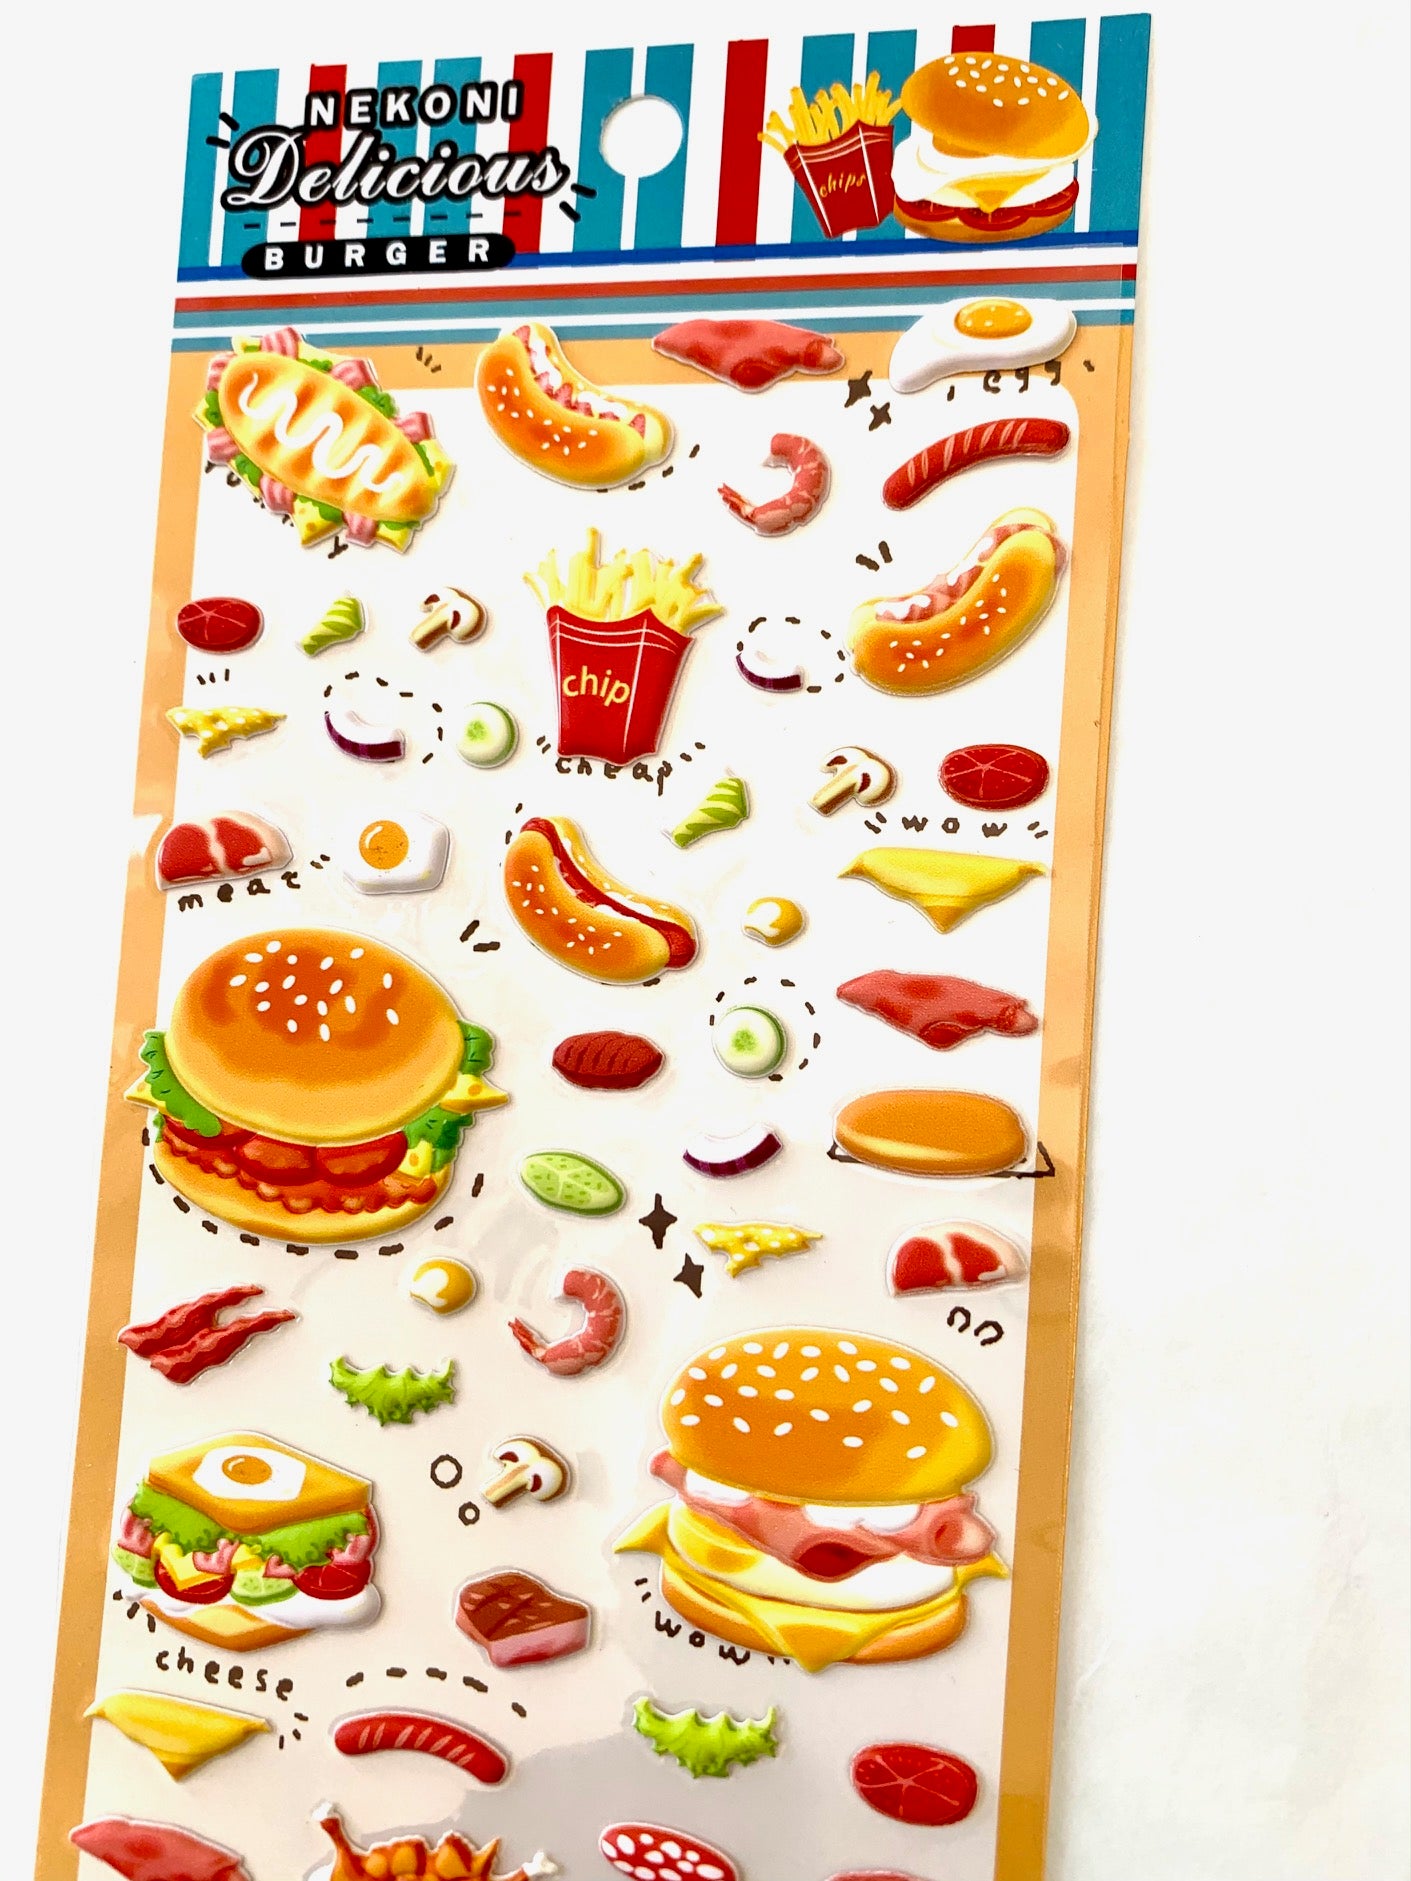 Burger Sticker for Sale by slyfieri